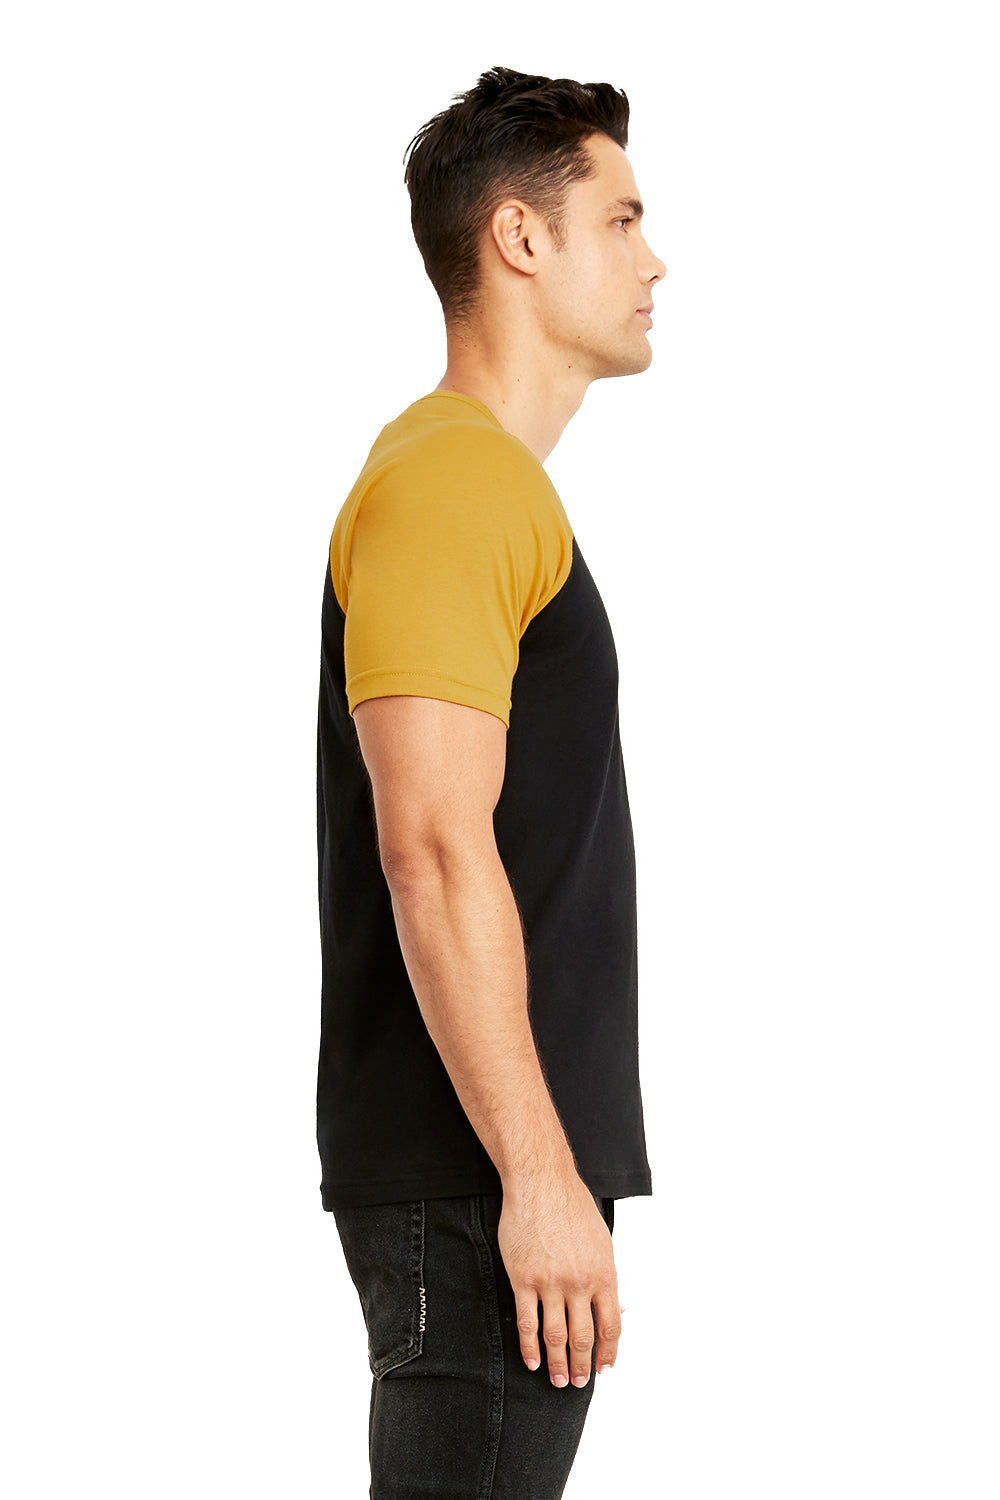 Next Level N3650 Mens Fine Jersey Short Sleeve Crewneck T-Shirt Antique Gold/Black Side